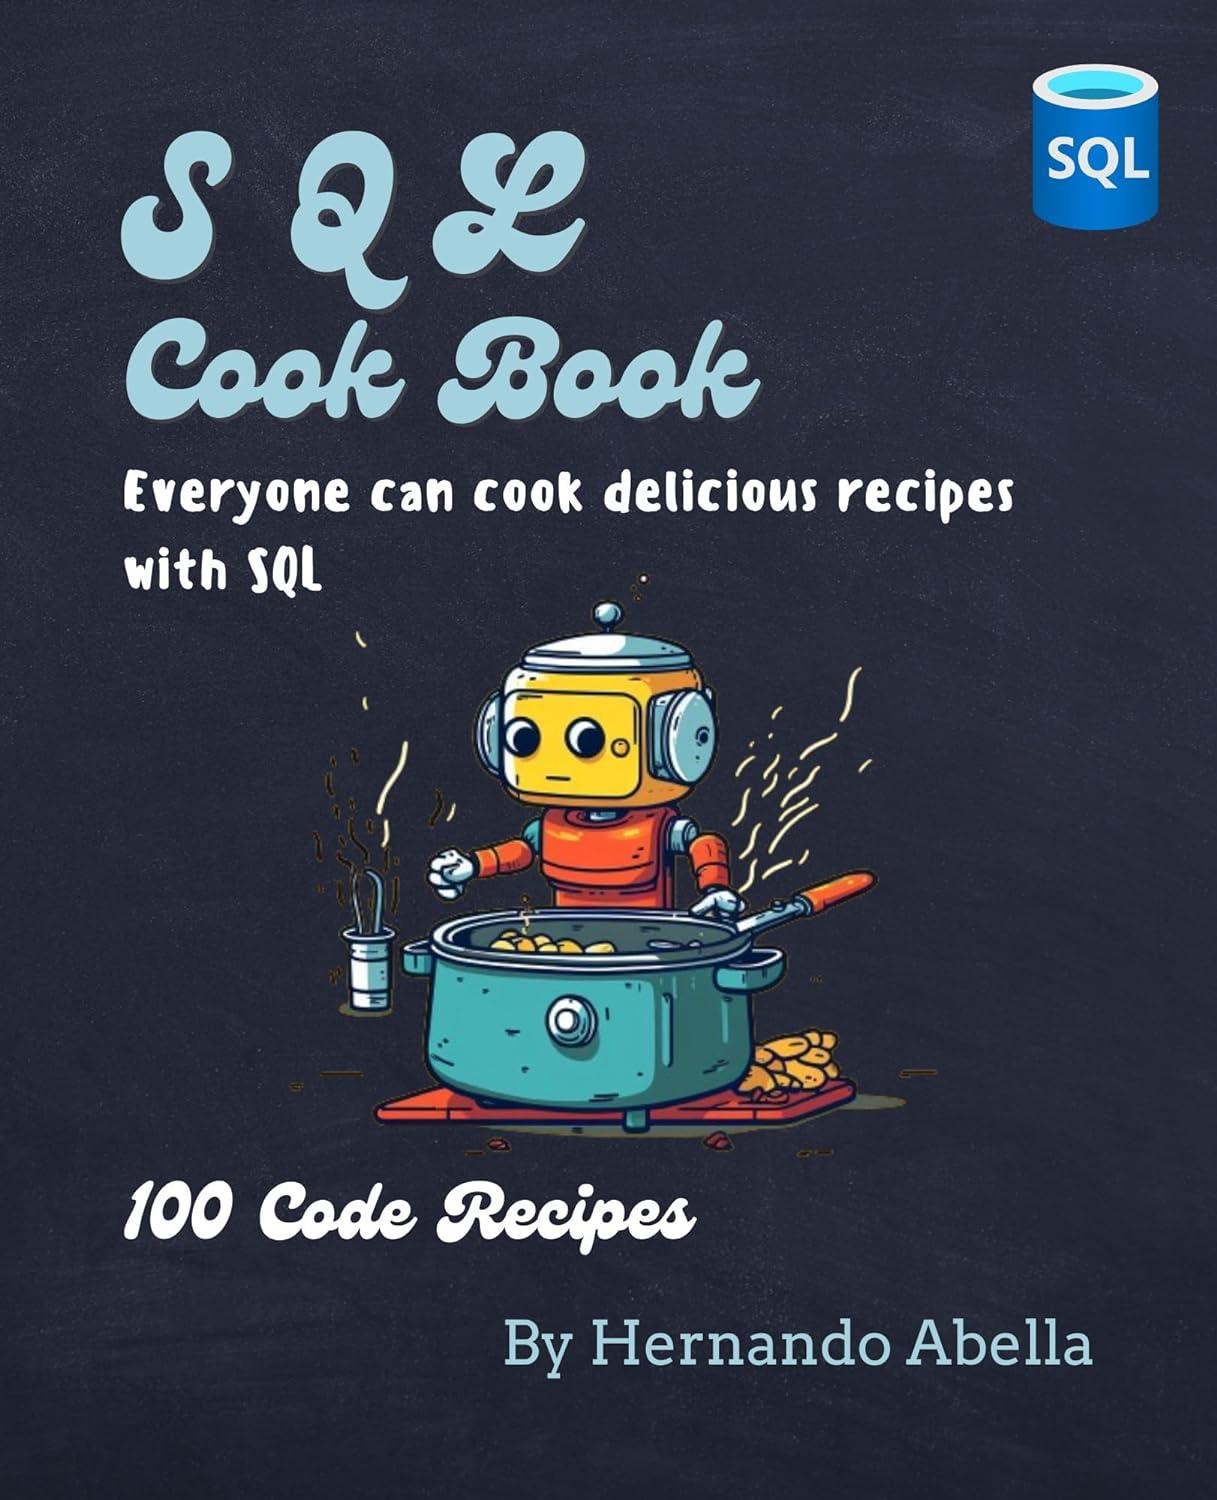 SQL Cook Book